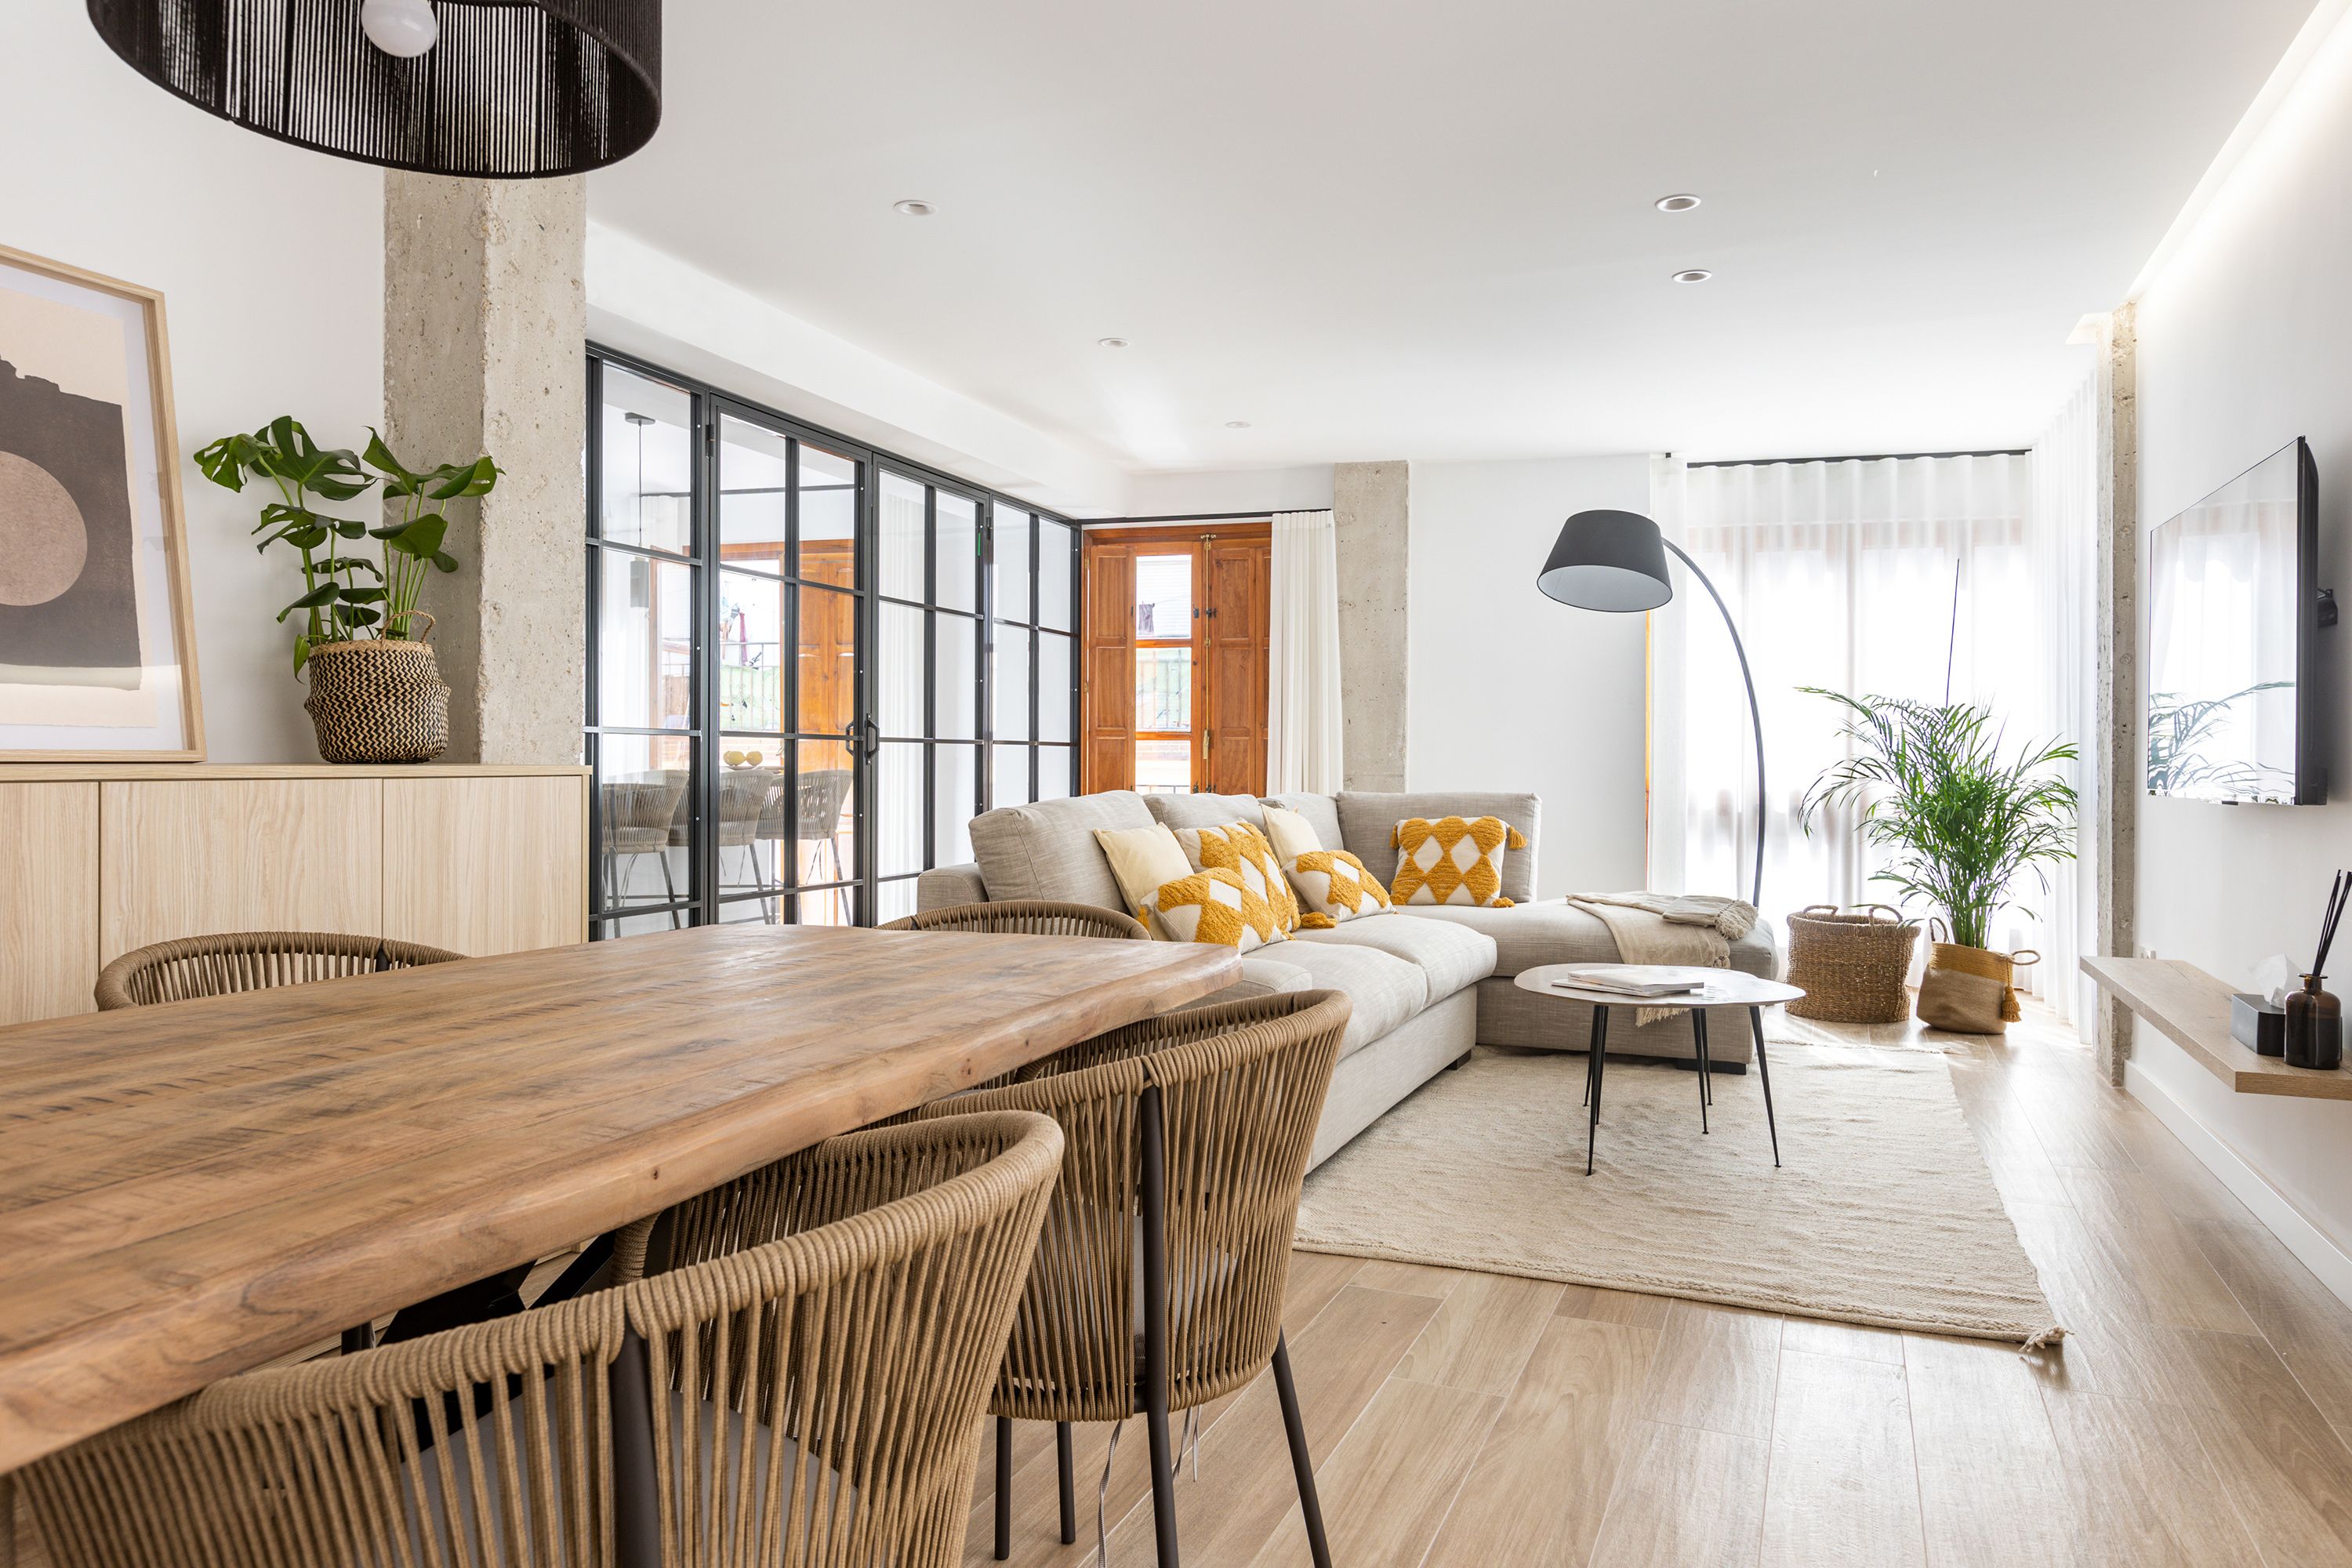 Un piso moderno y open space decorado en tonos neutros